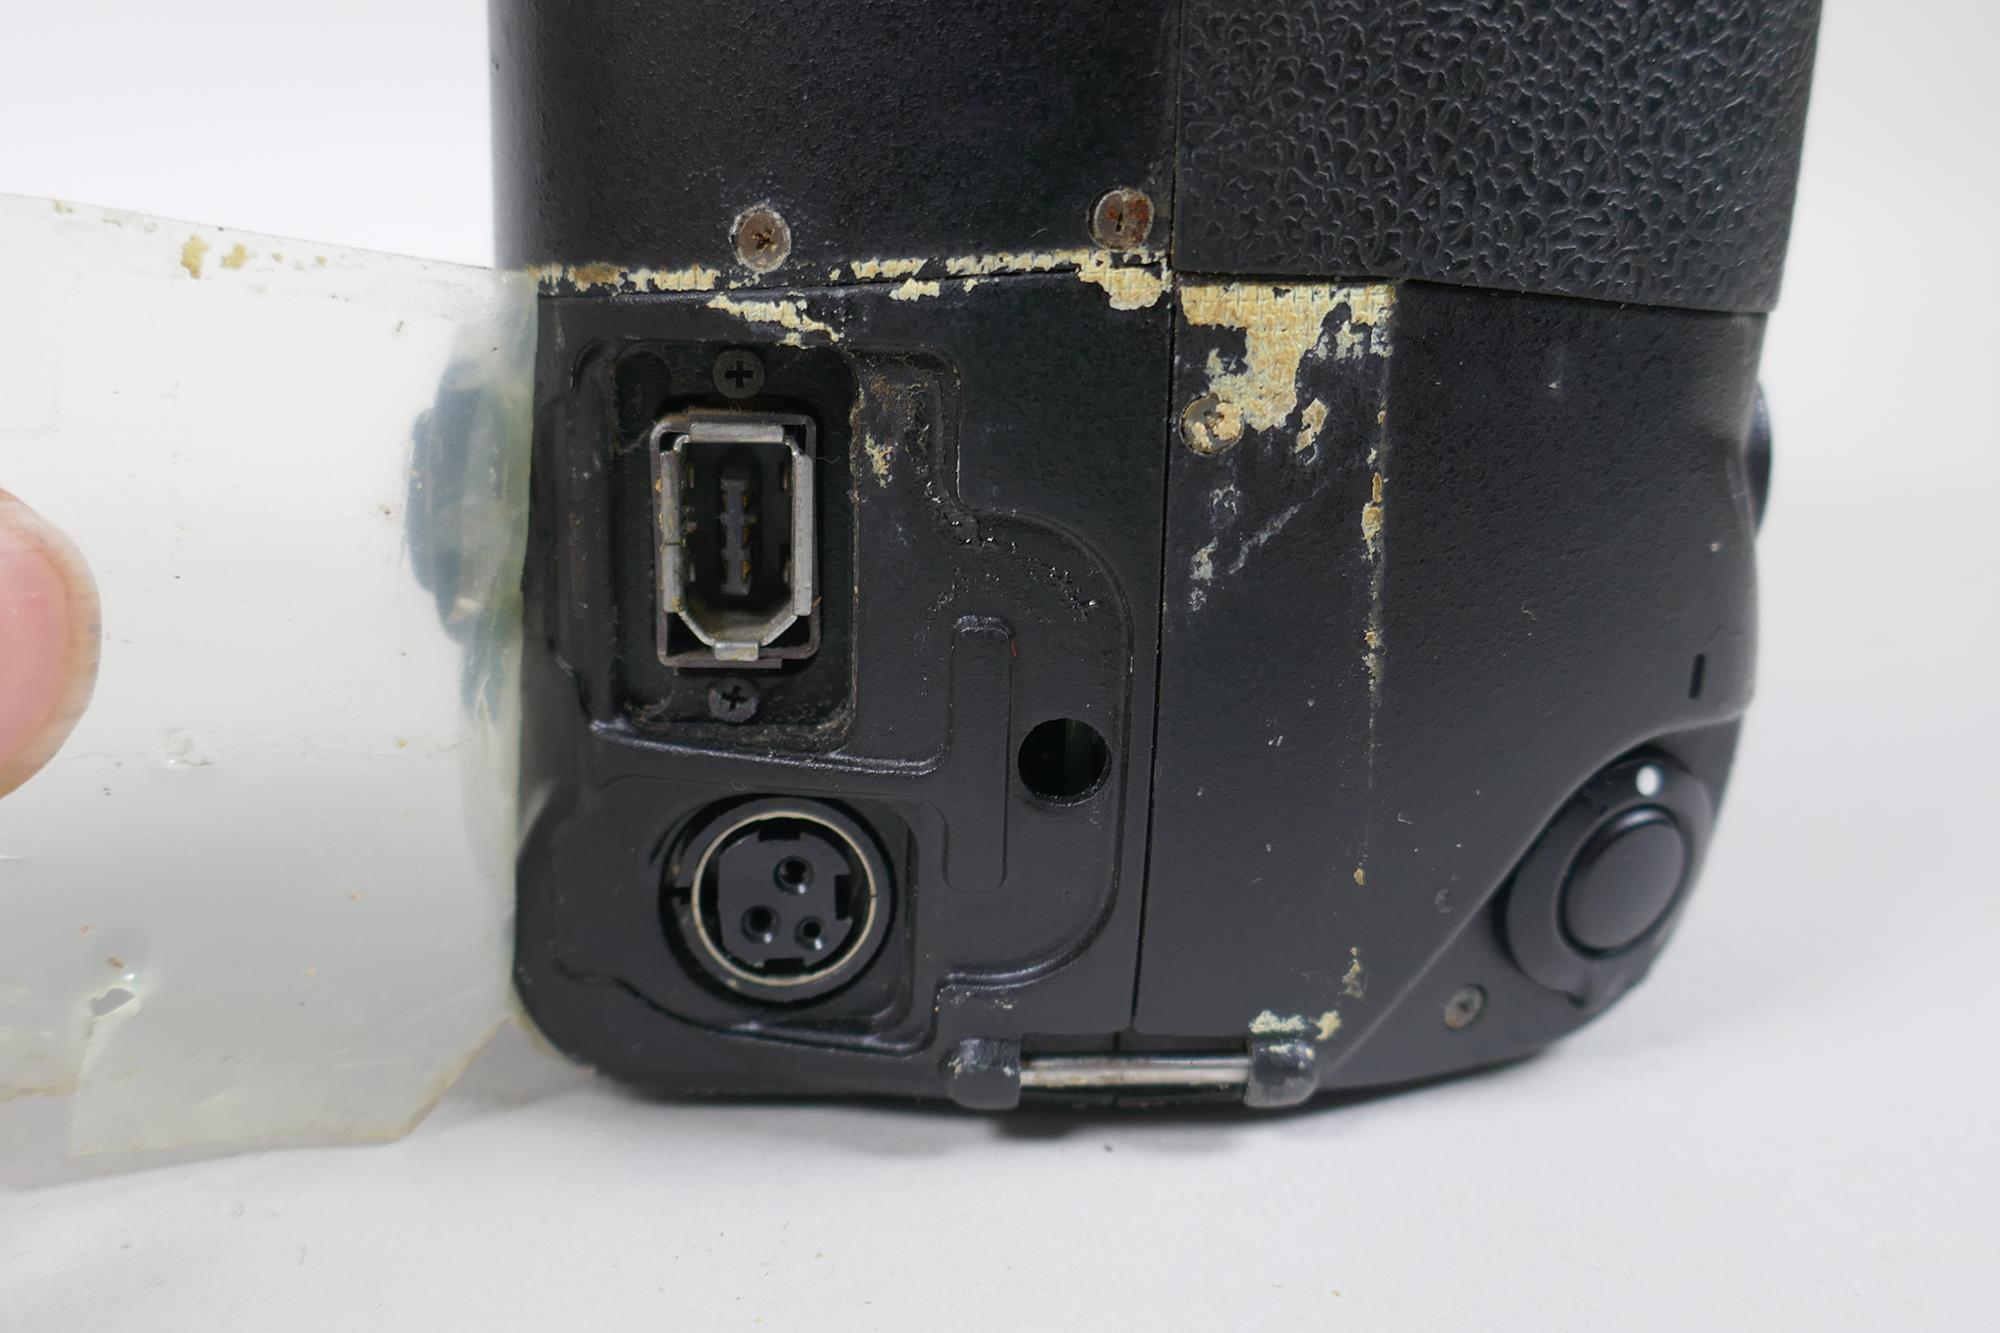 A Nikon F5 Kodak Professional DCS 620 digital camera, fitted with an AF Nikkor 28-80mm lens, - Image 8 of 8